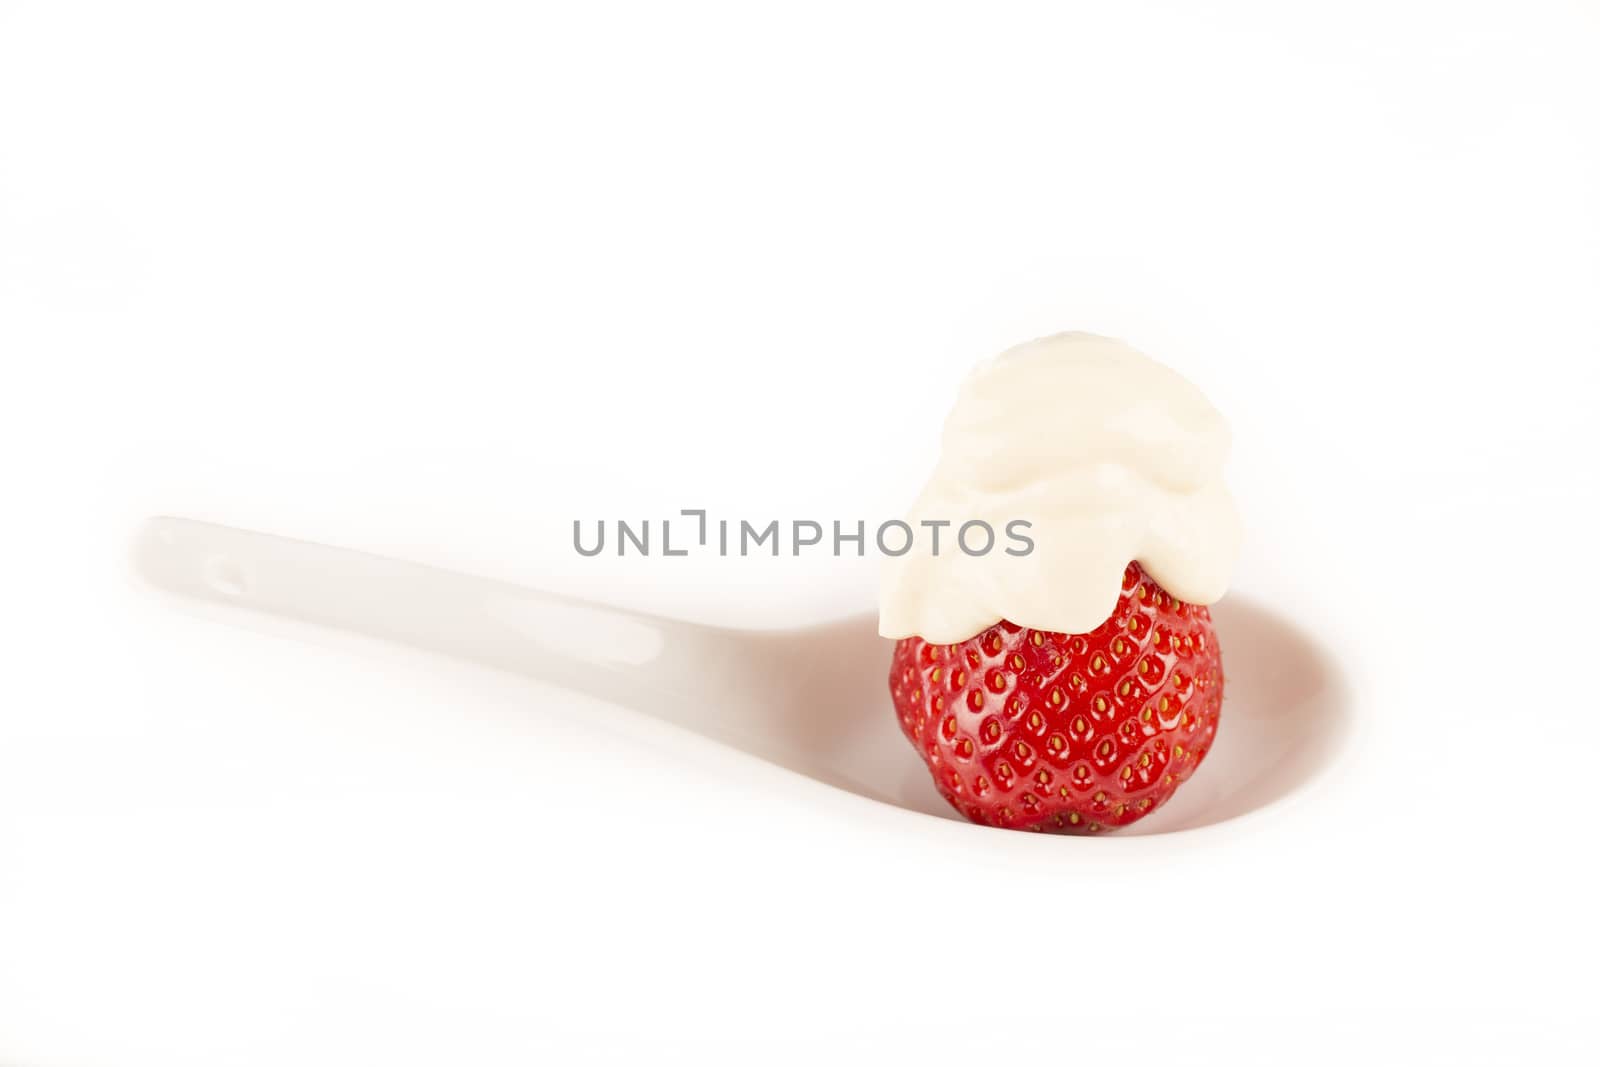 strawberry with cream vanilia in white spoon white background France